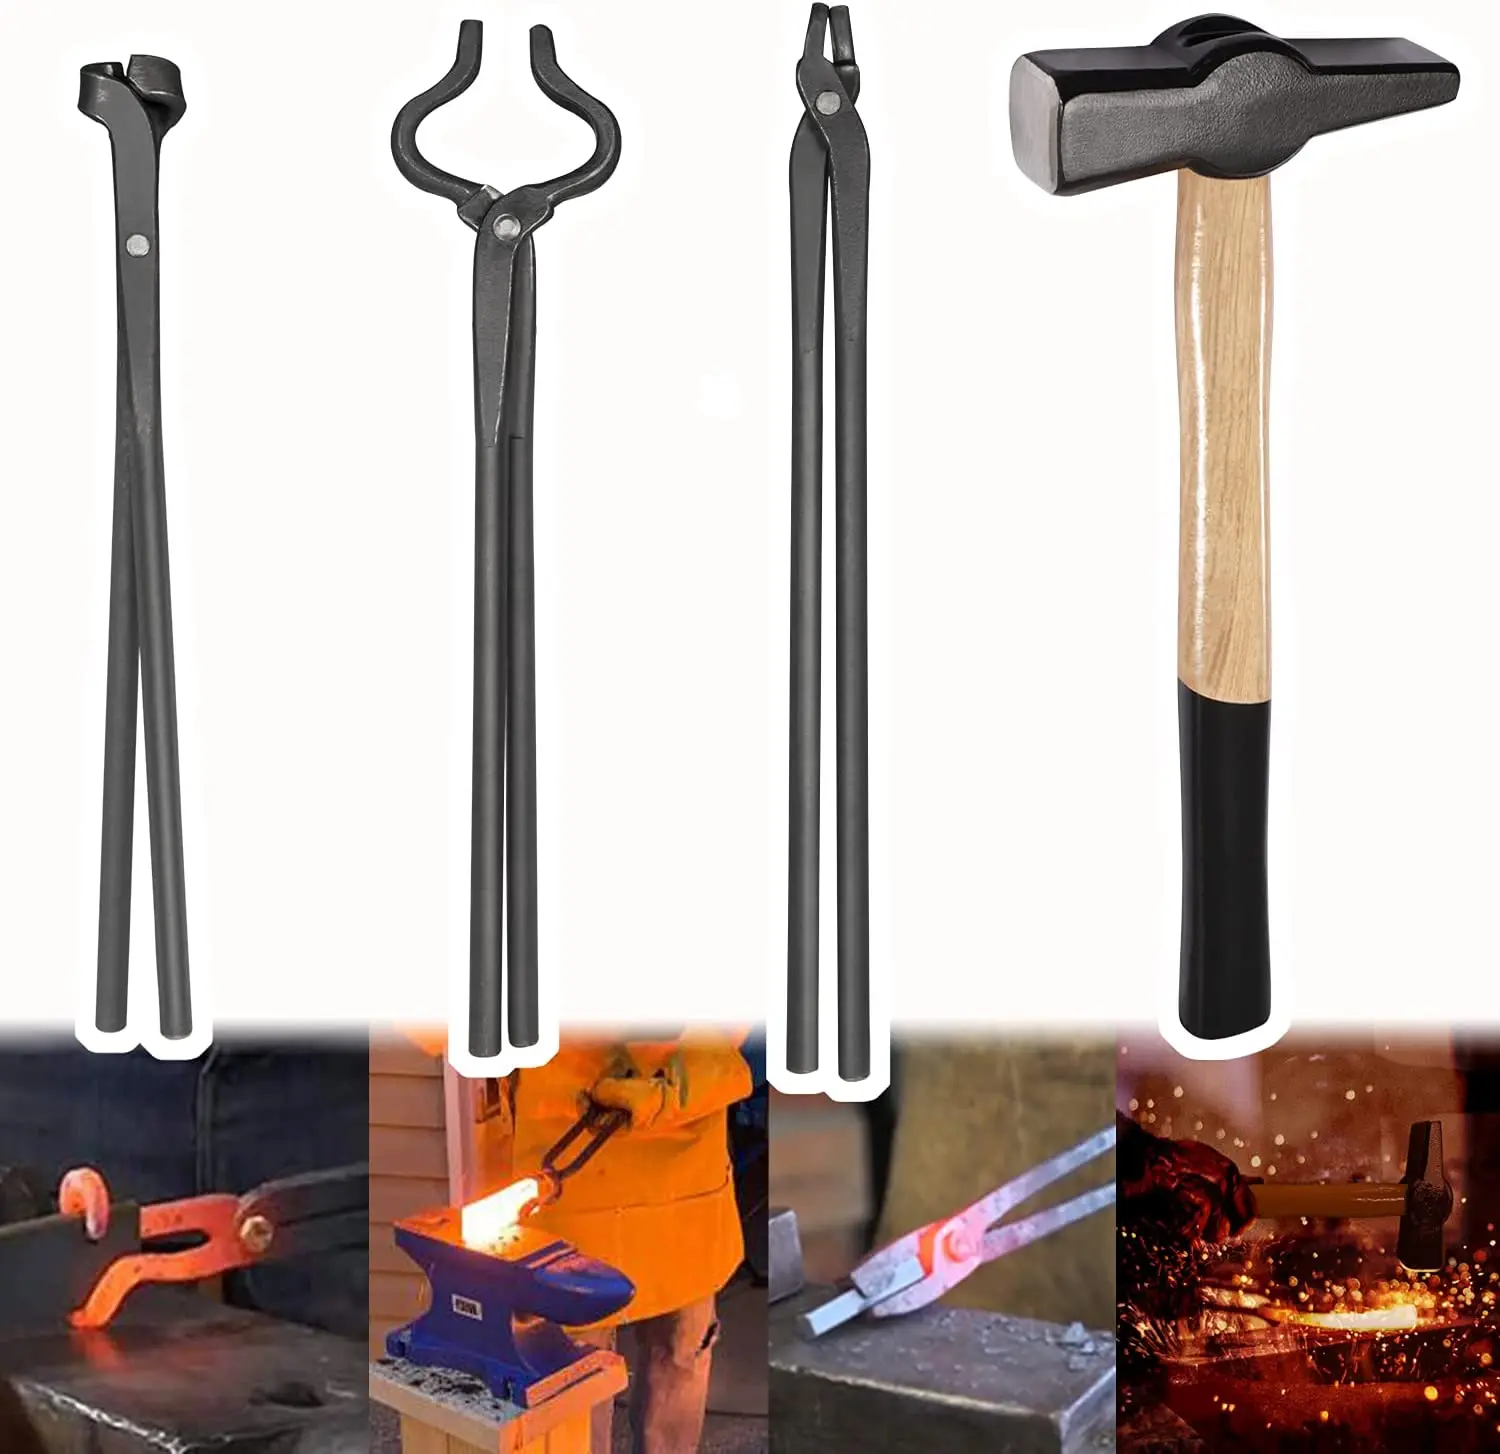 TM 4Pcs/set Knife Making Tongs Set and Blacksmiths’ Hammer Assembled Bladesmith Blacksmith Forge Tongs Tools Set Vise Tools